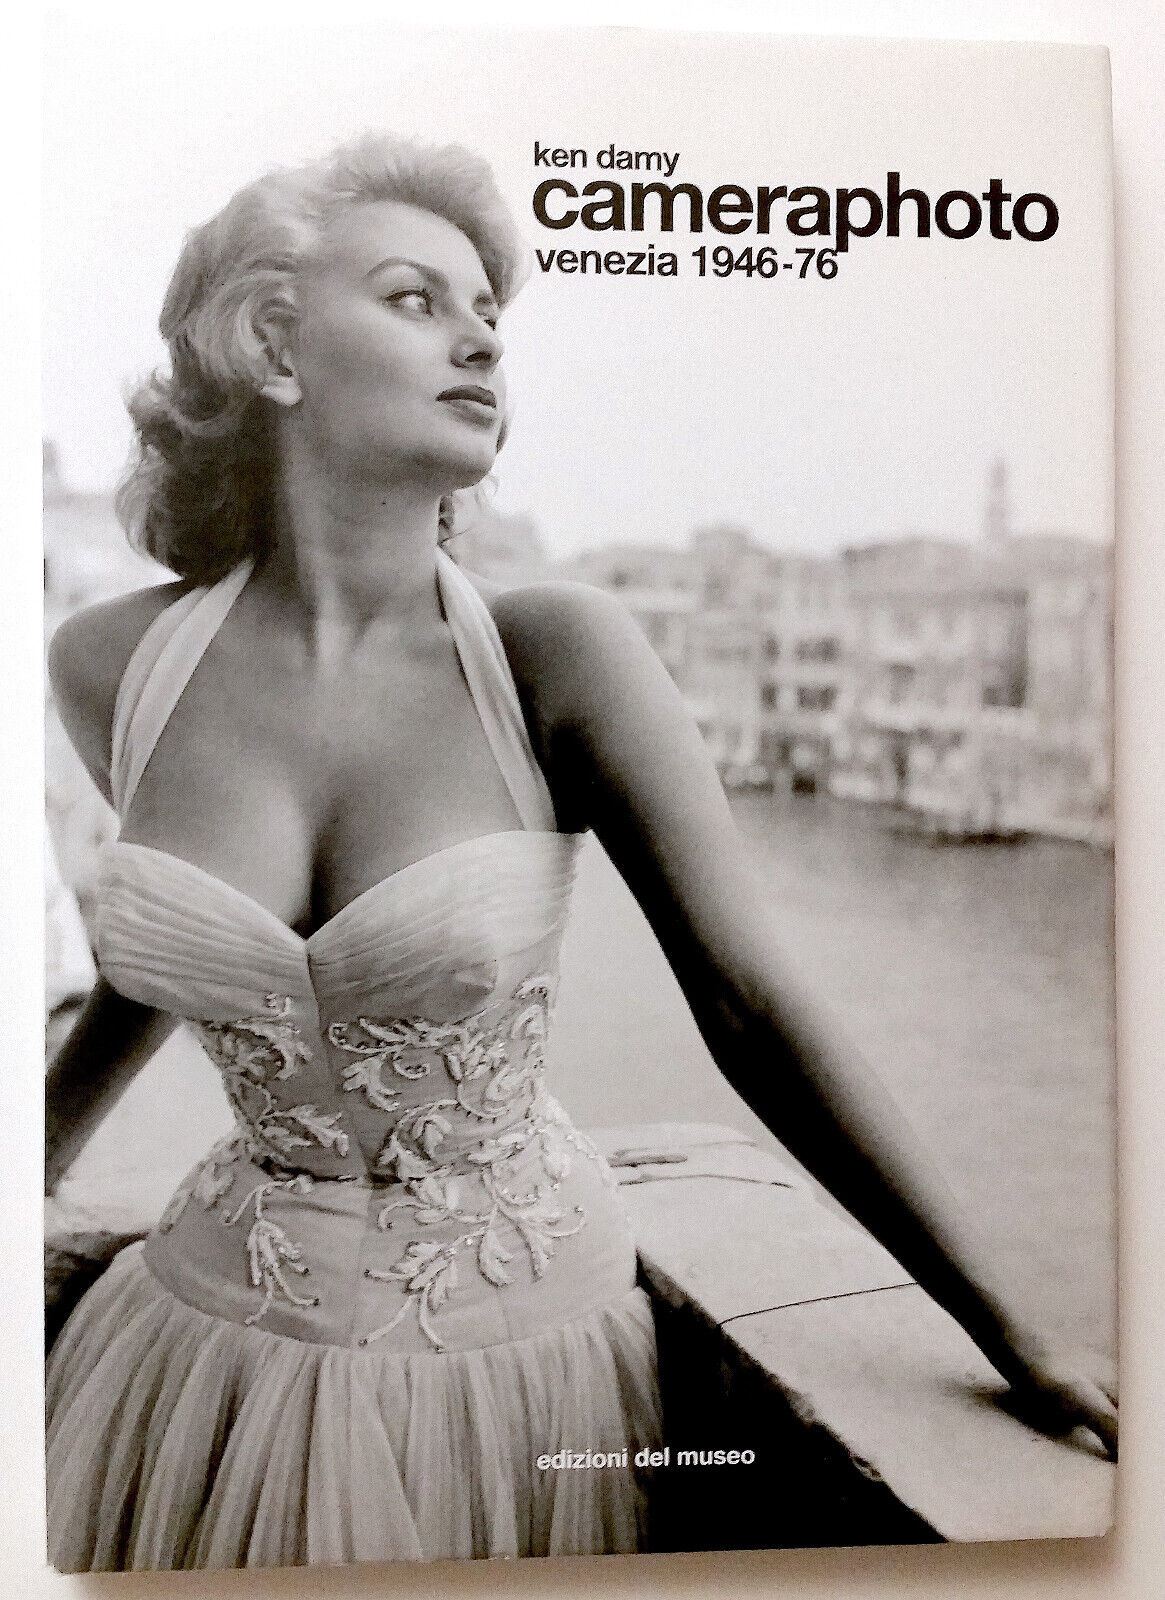 Photography Book Cameraphoto Venezia 1946 by Ken Damy 1976 Black and White Photo